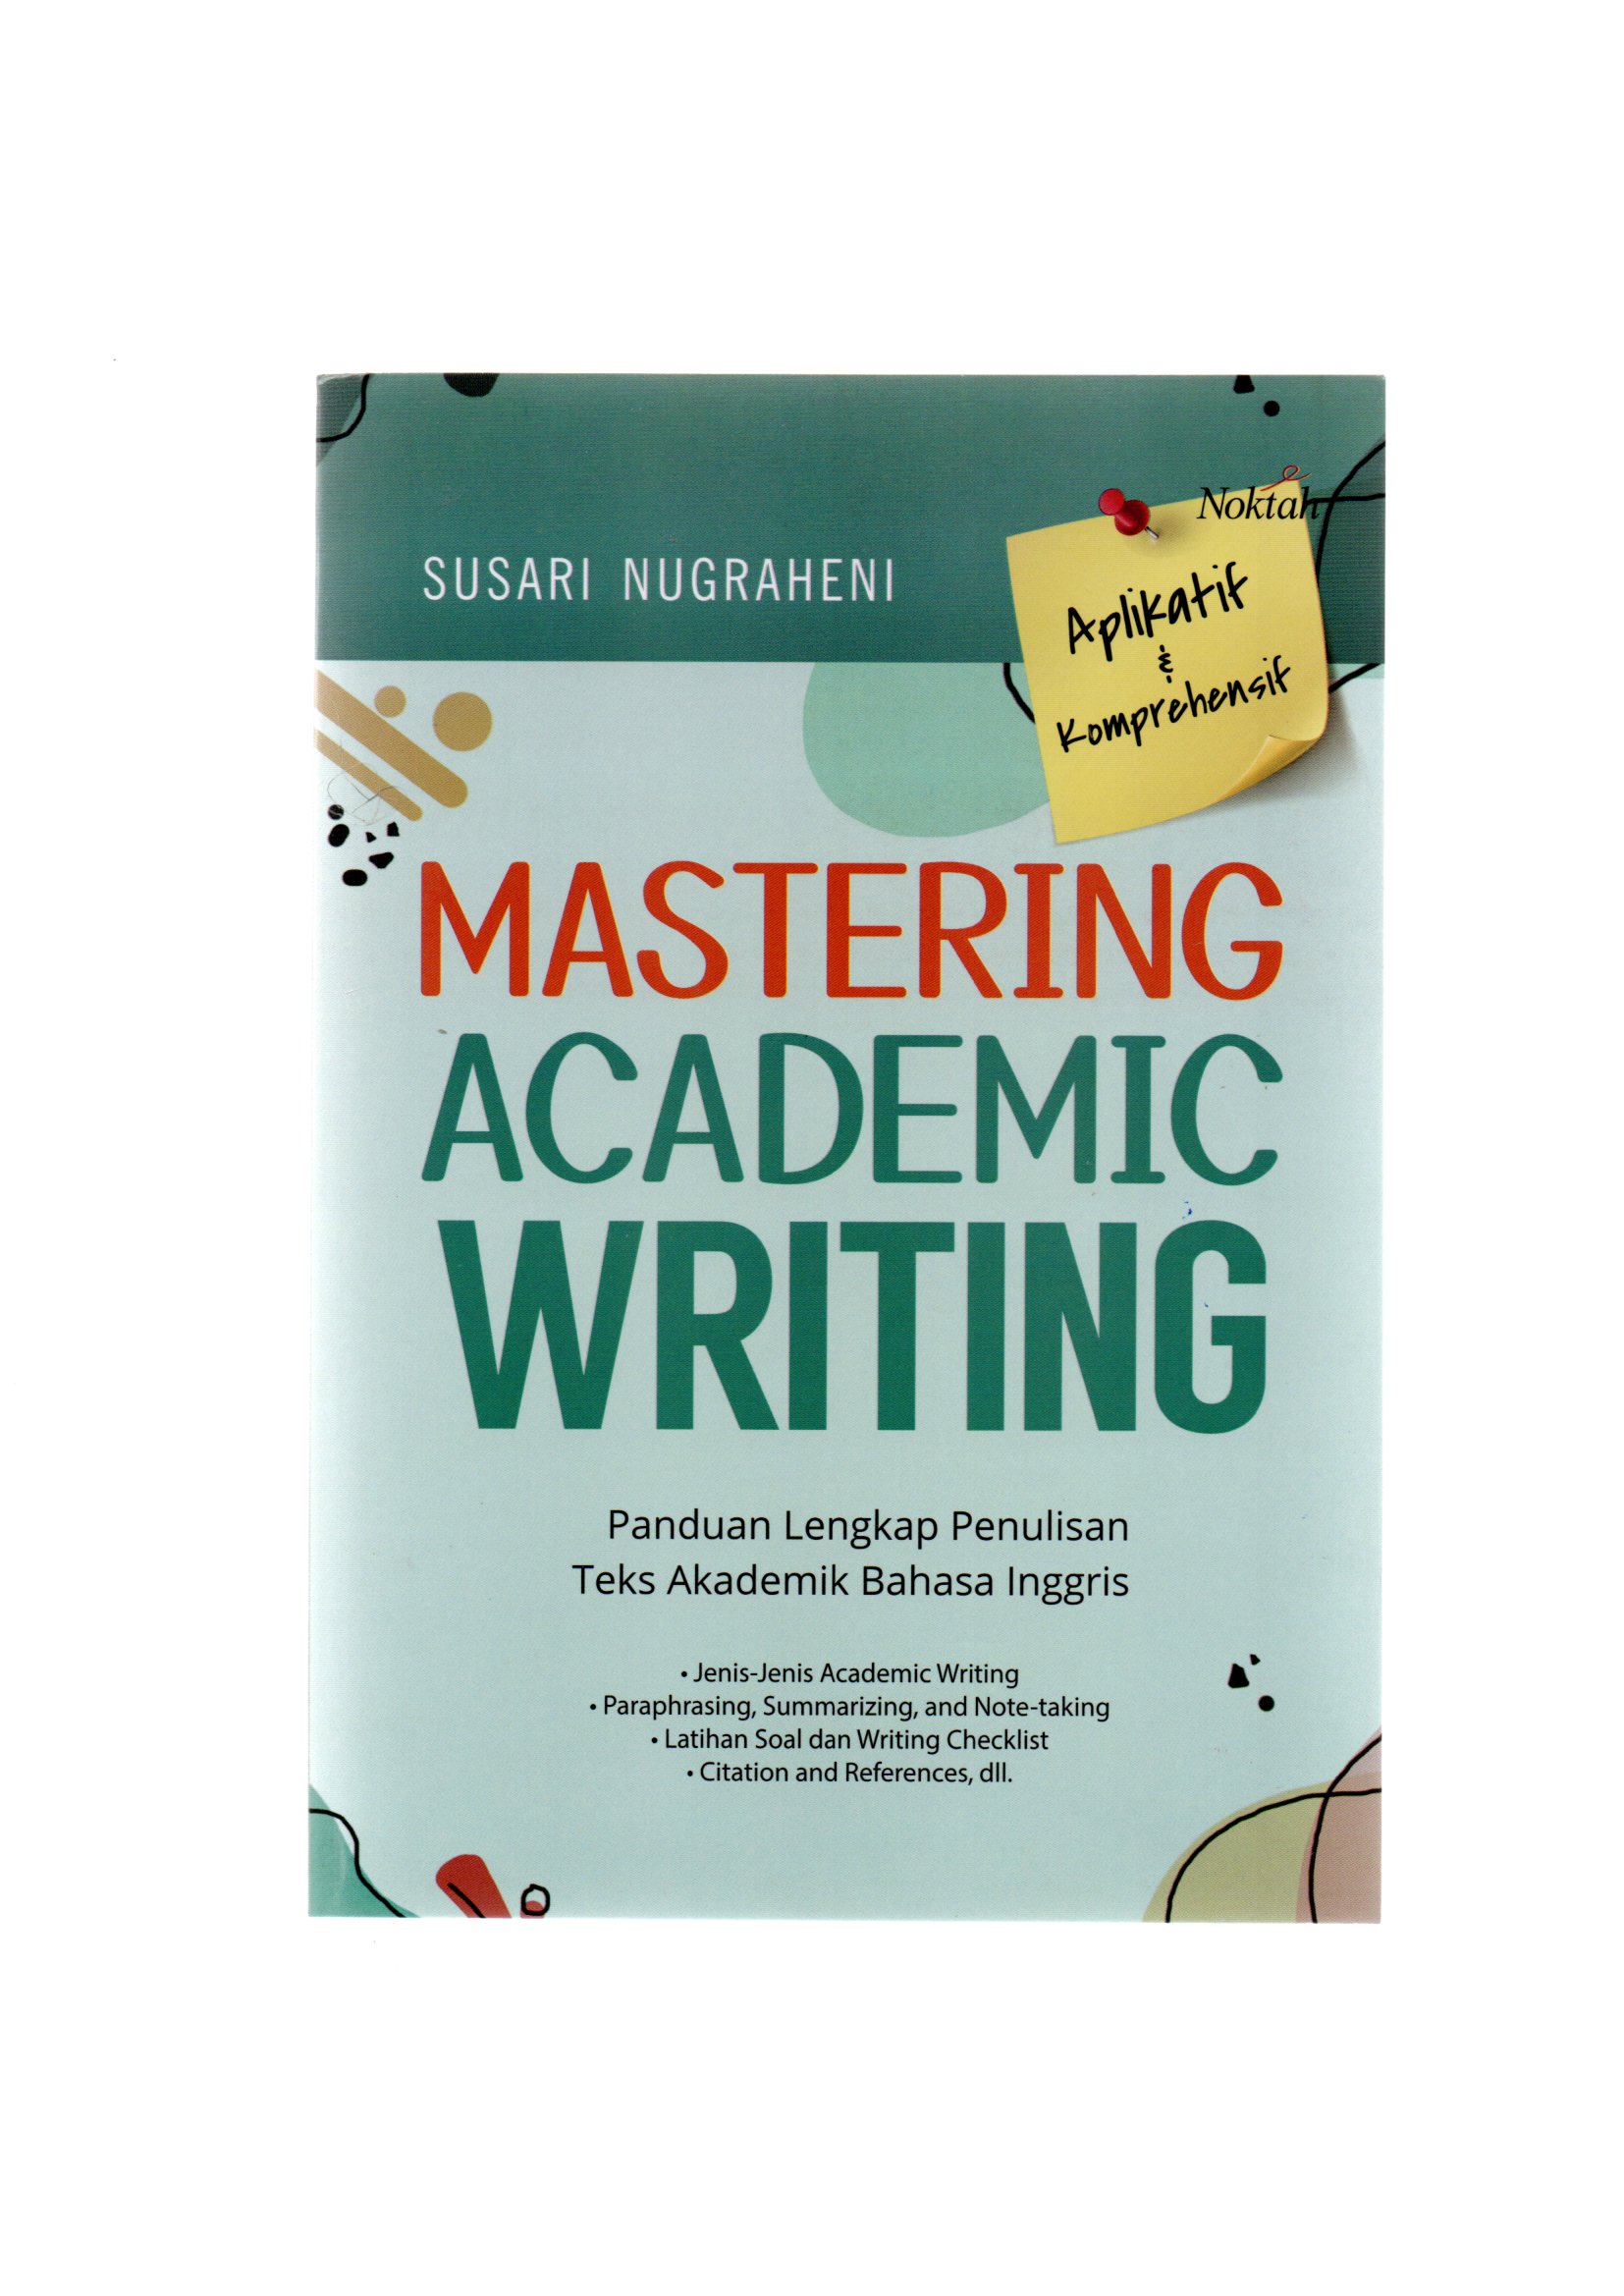 Mastering academic writing